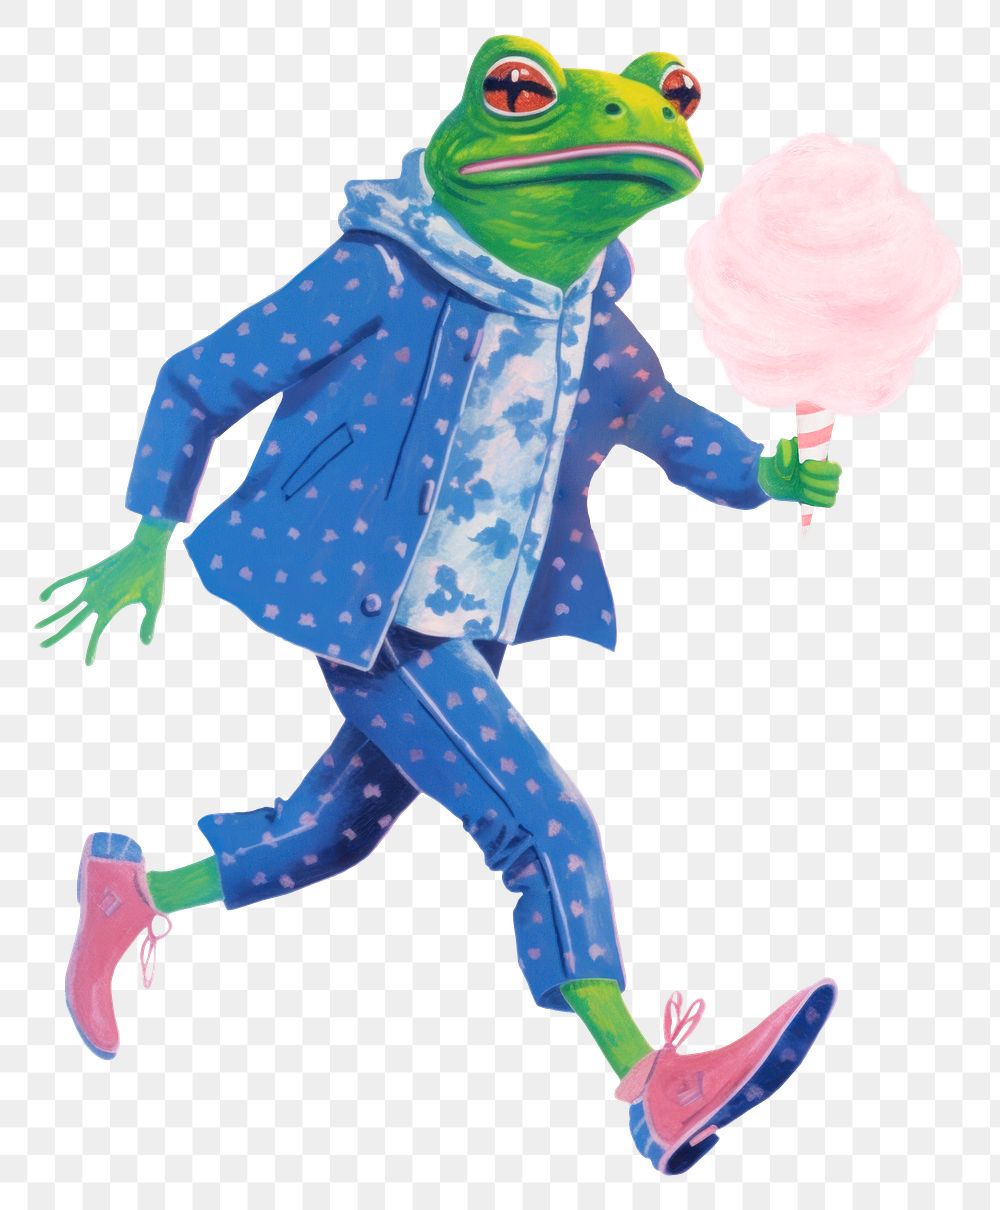 Frog character png holding cotton candy digital art illustration, transparent background